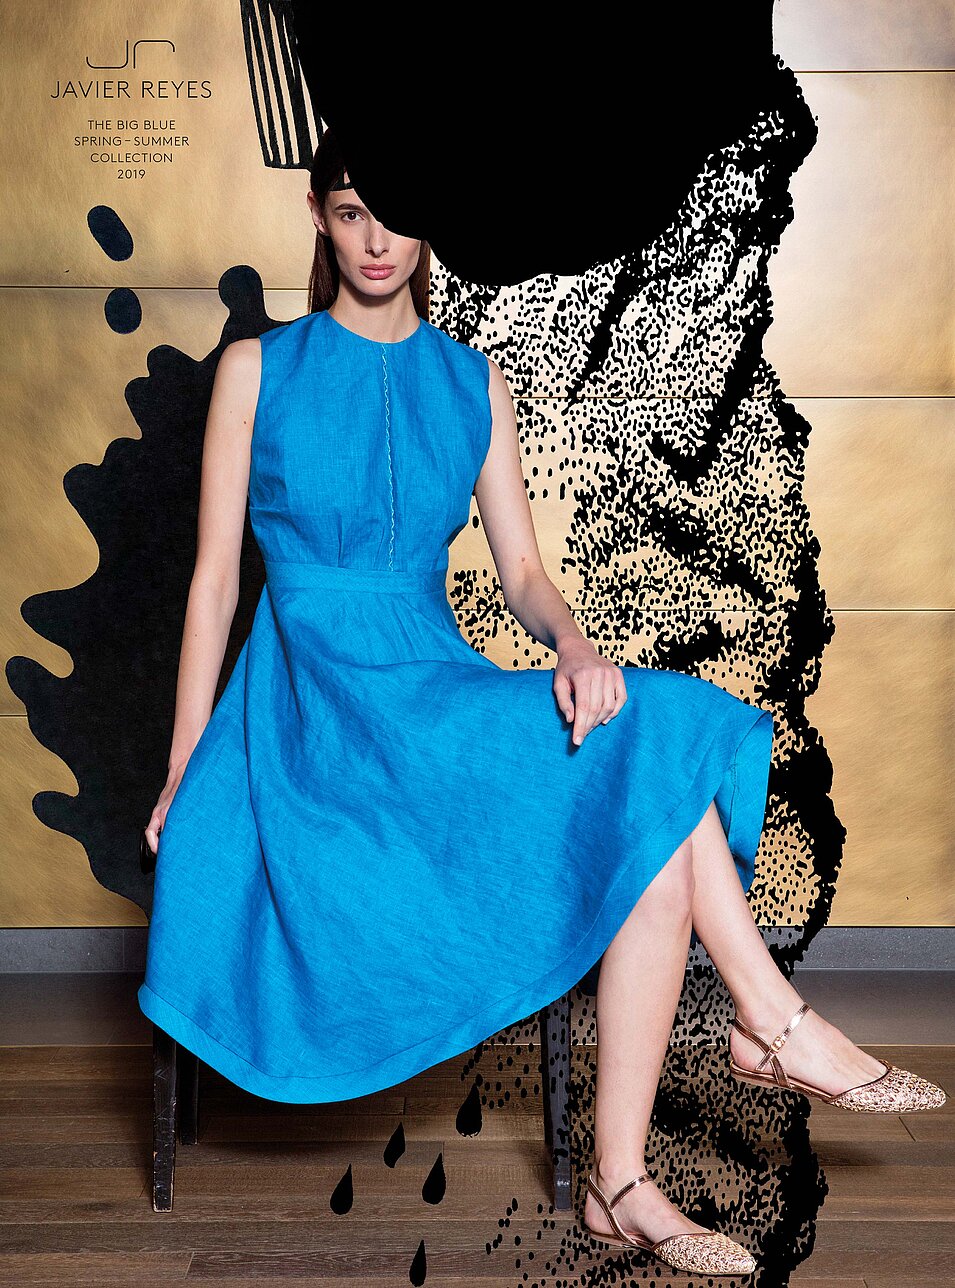 poster blue dress with illustrations black spots advertising bern